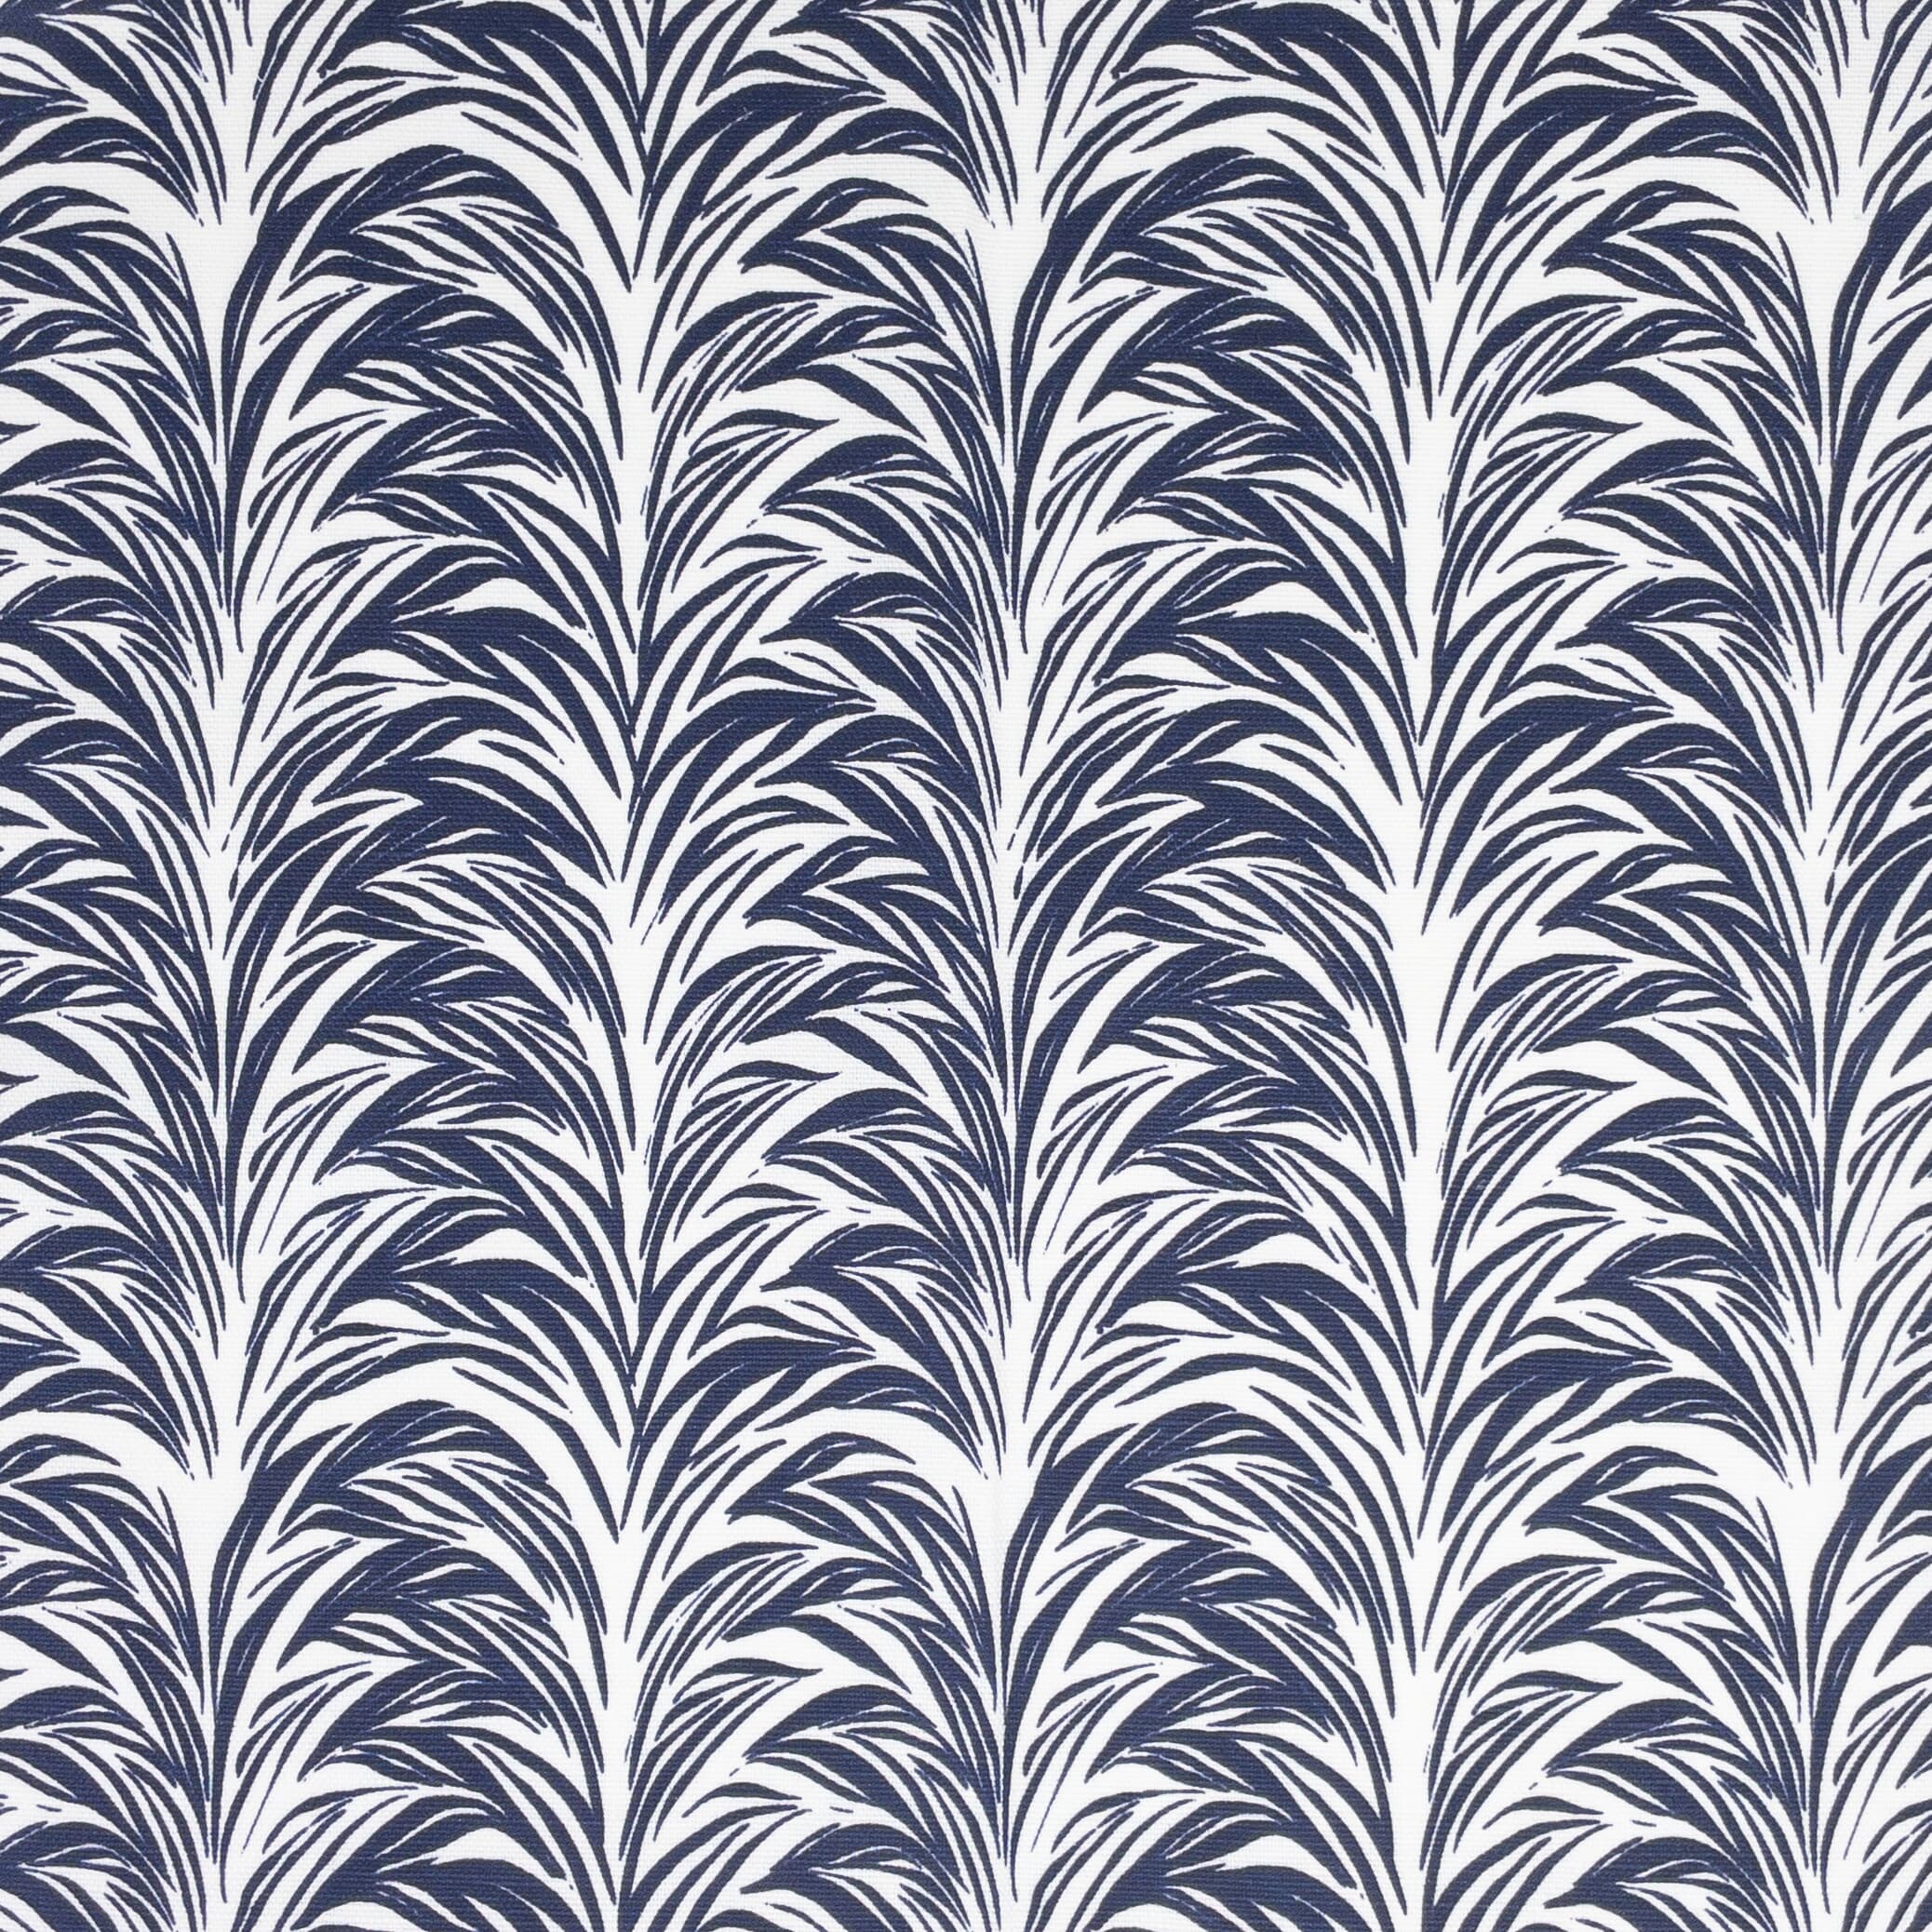 7825-2 Zebra Fern Navy by Stout Fabric